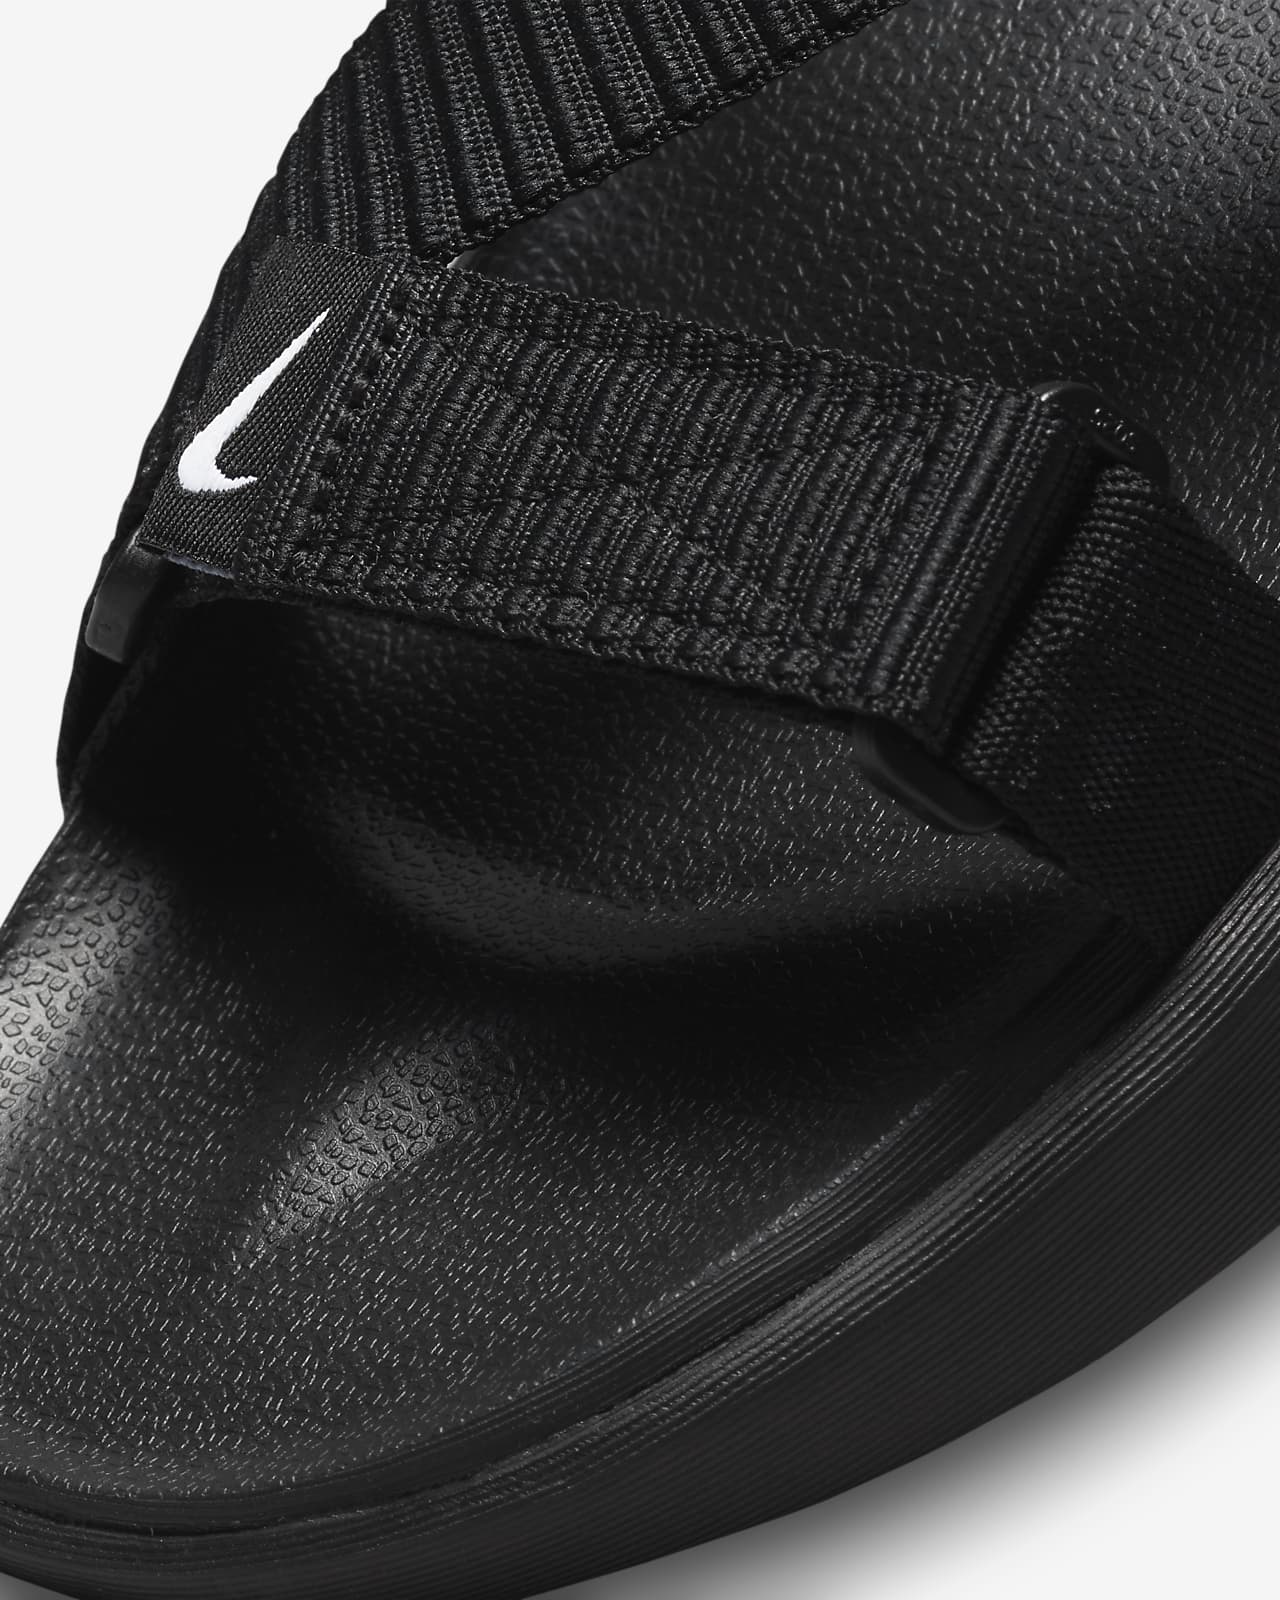 Nike Vista Men's Sandals.